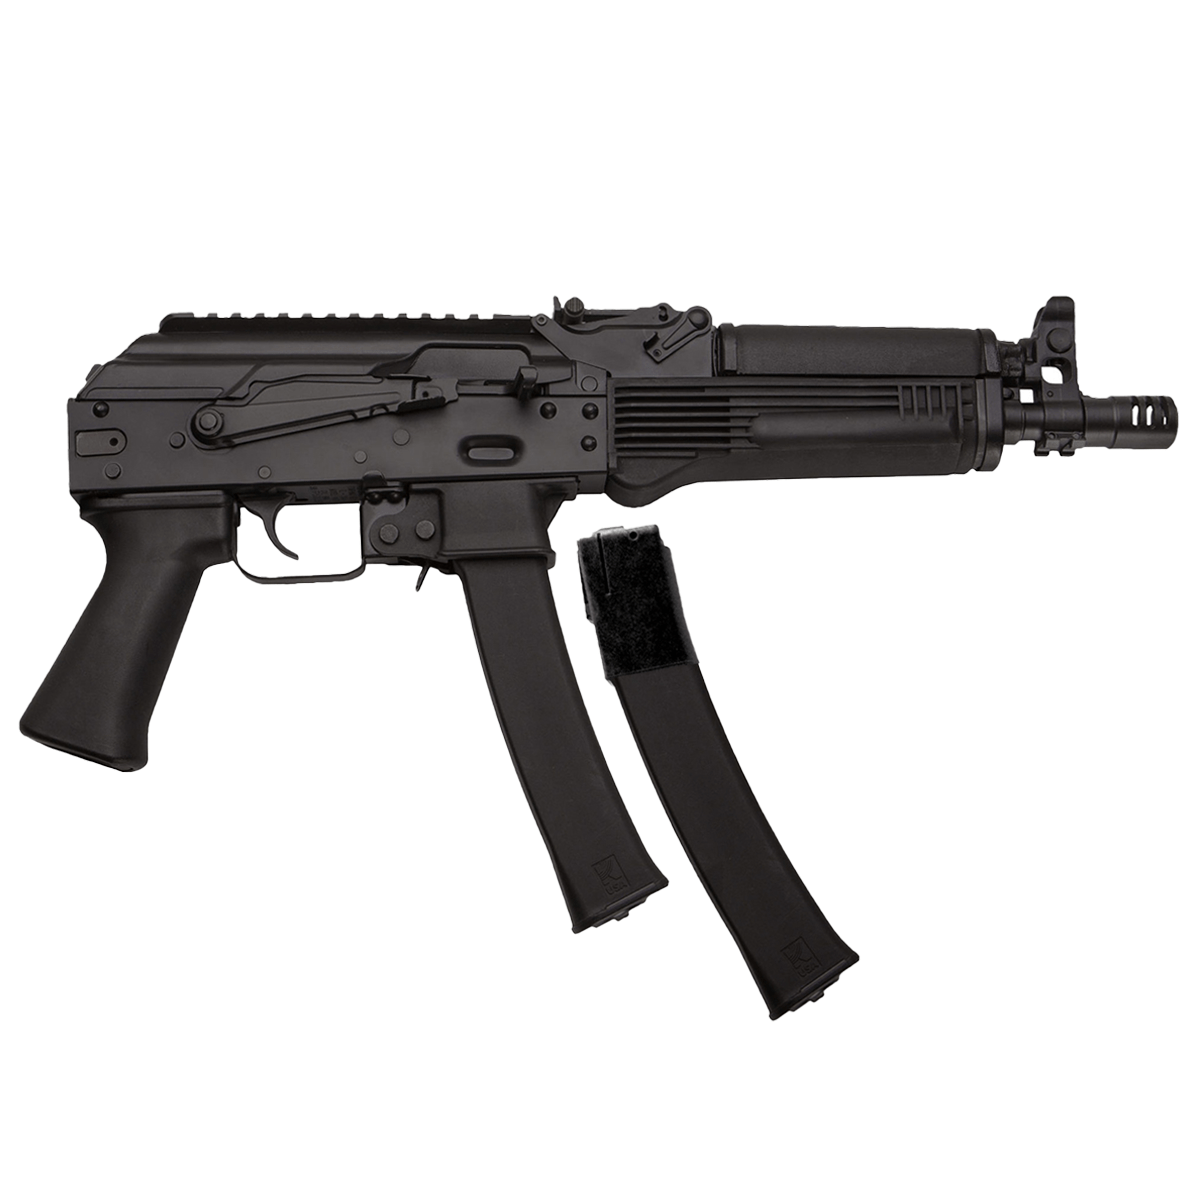 Kalashnikov USA KP-9 9mm Pistol AK-47 Semi-Automatic Pistol